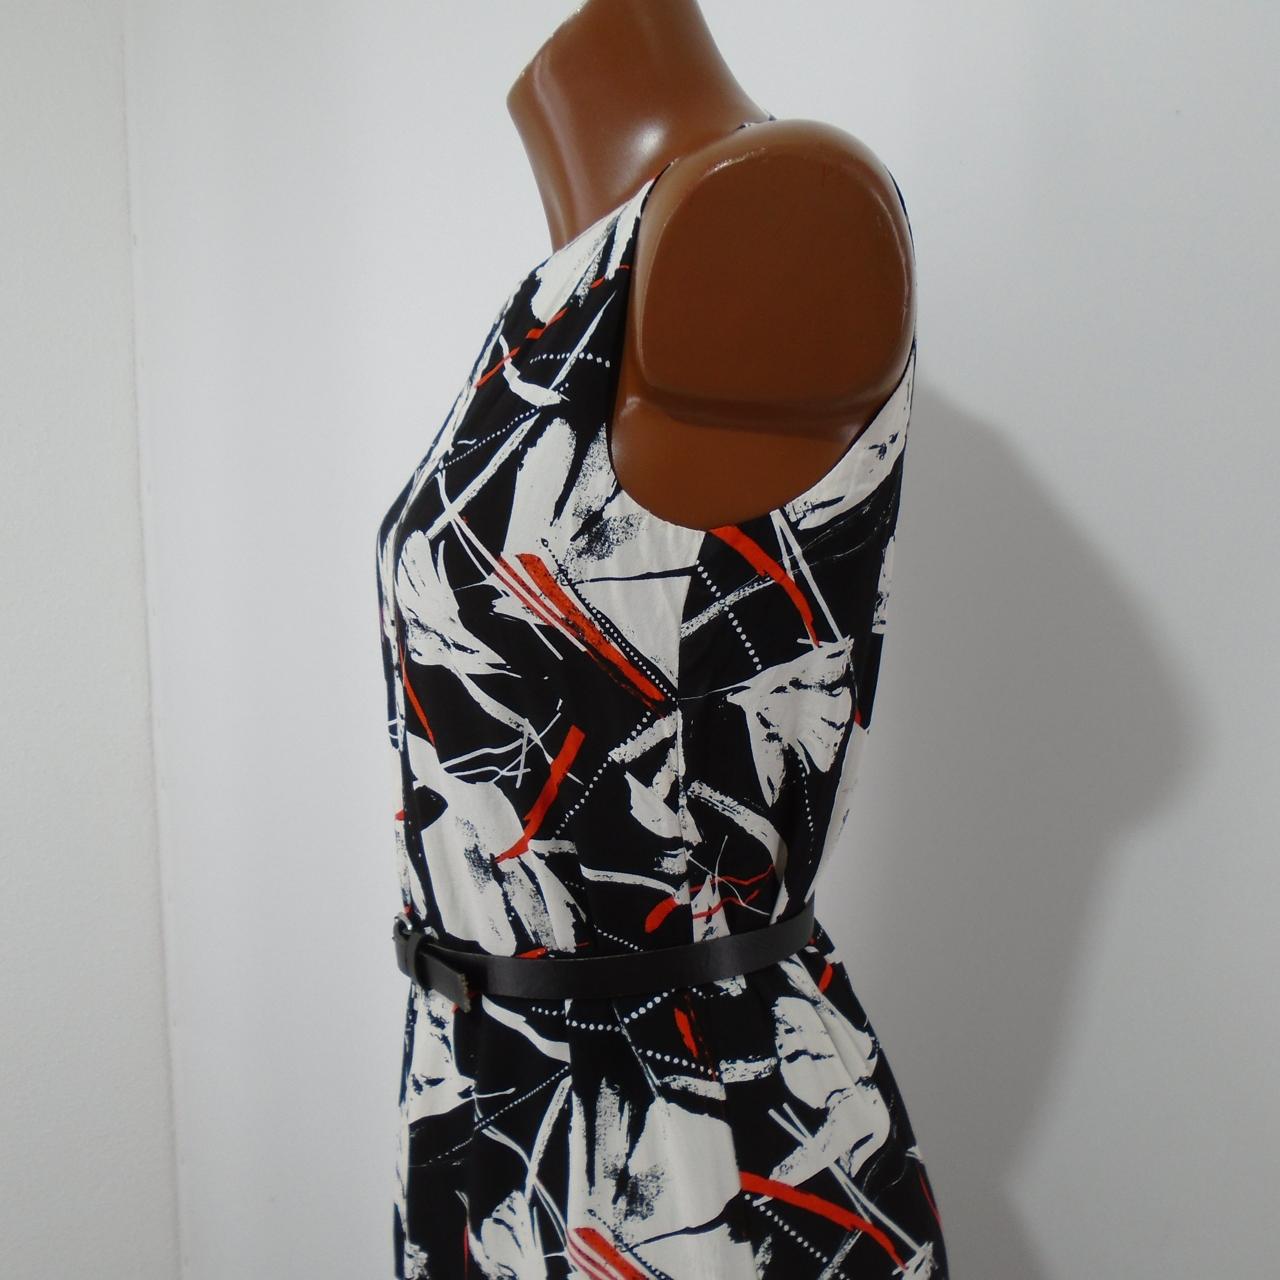 Women's Dress Esprit. Multicolor. M. Used. Good